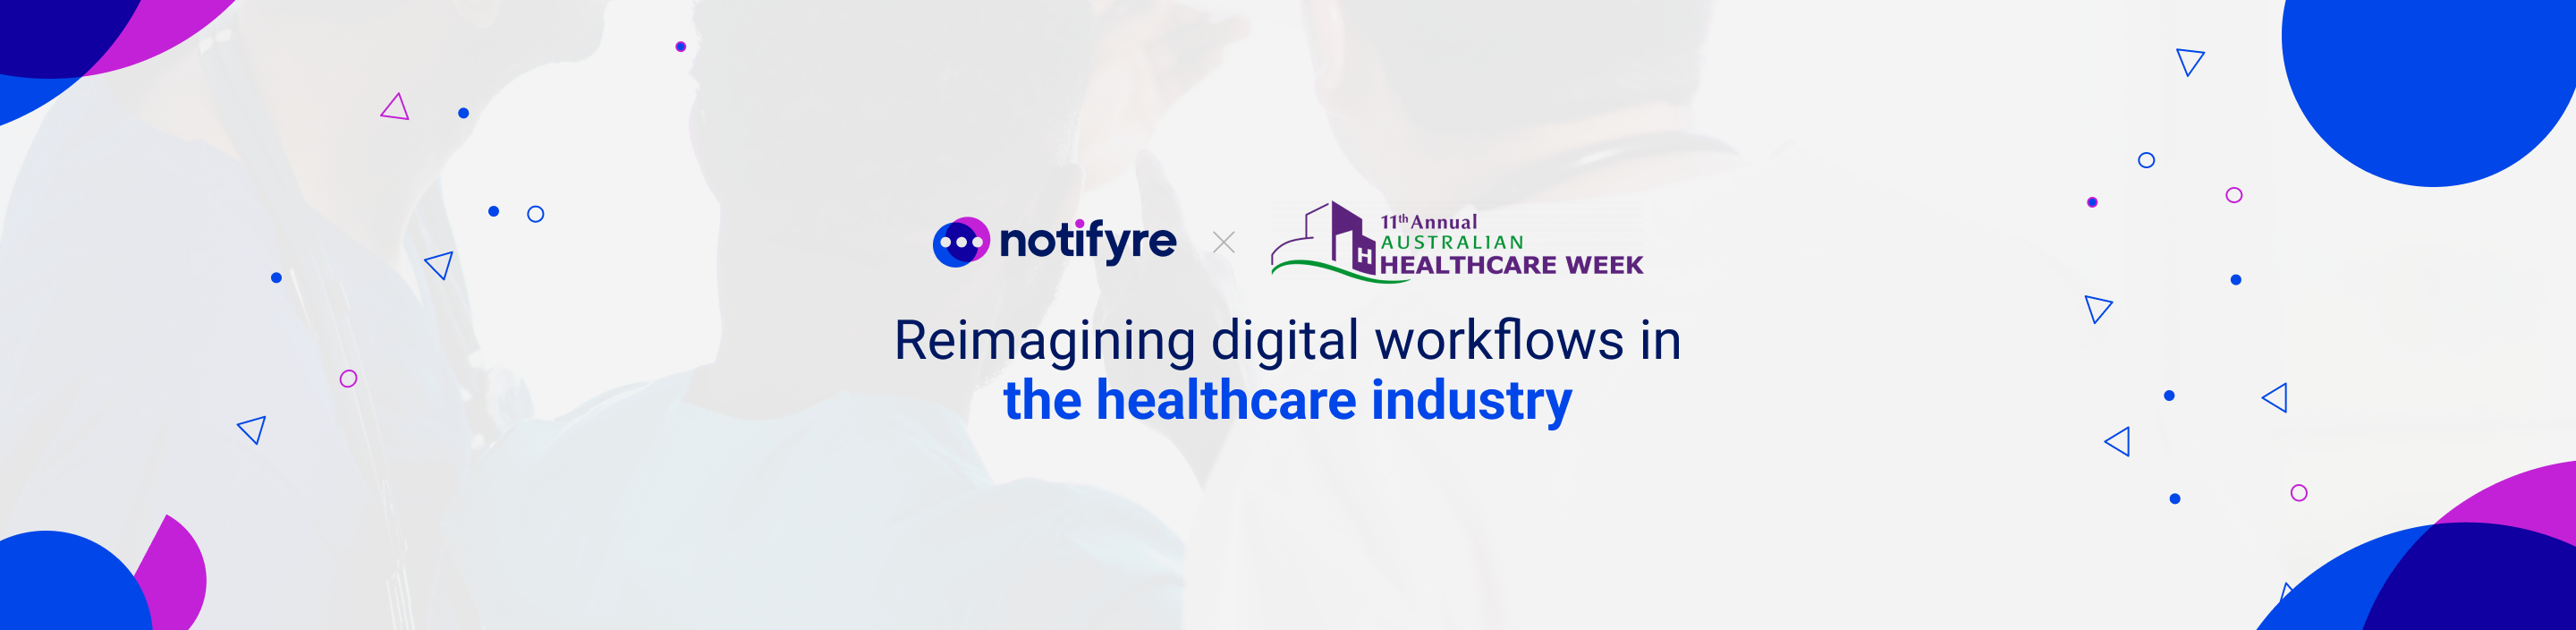 Reimagining-digital-workflows-in-the-healthcare-industry